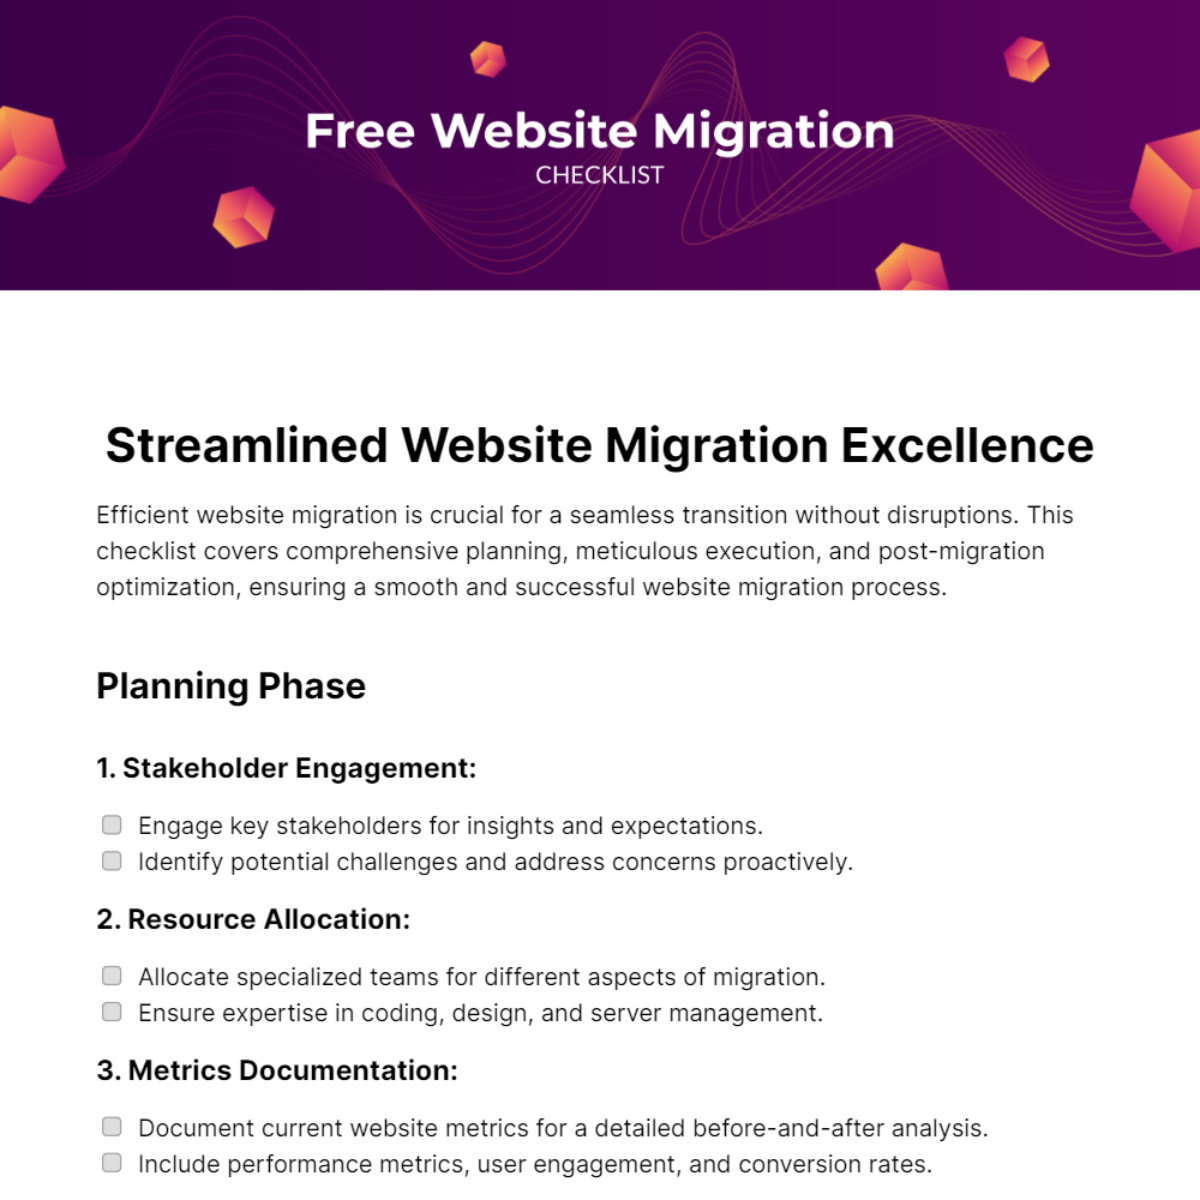 Free Website Migration Checklist Template